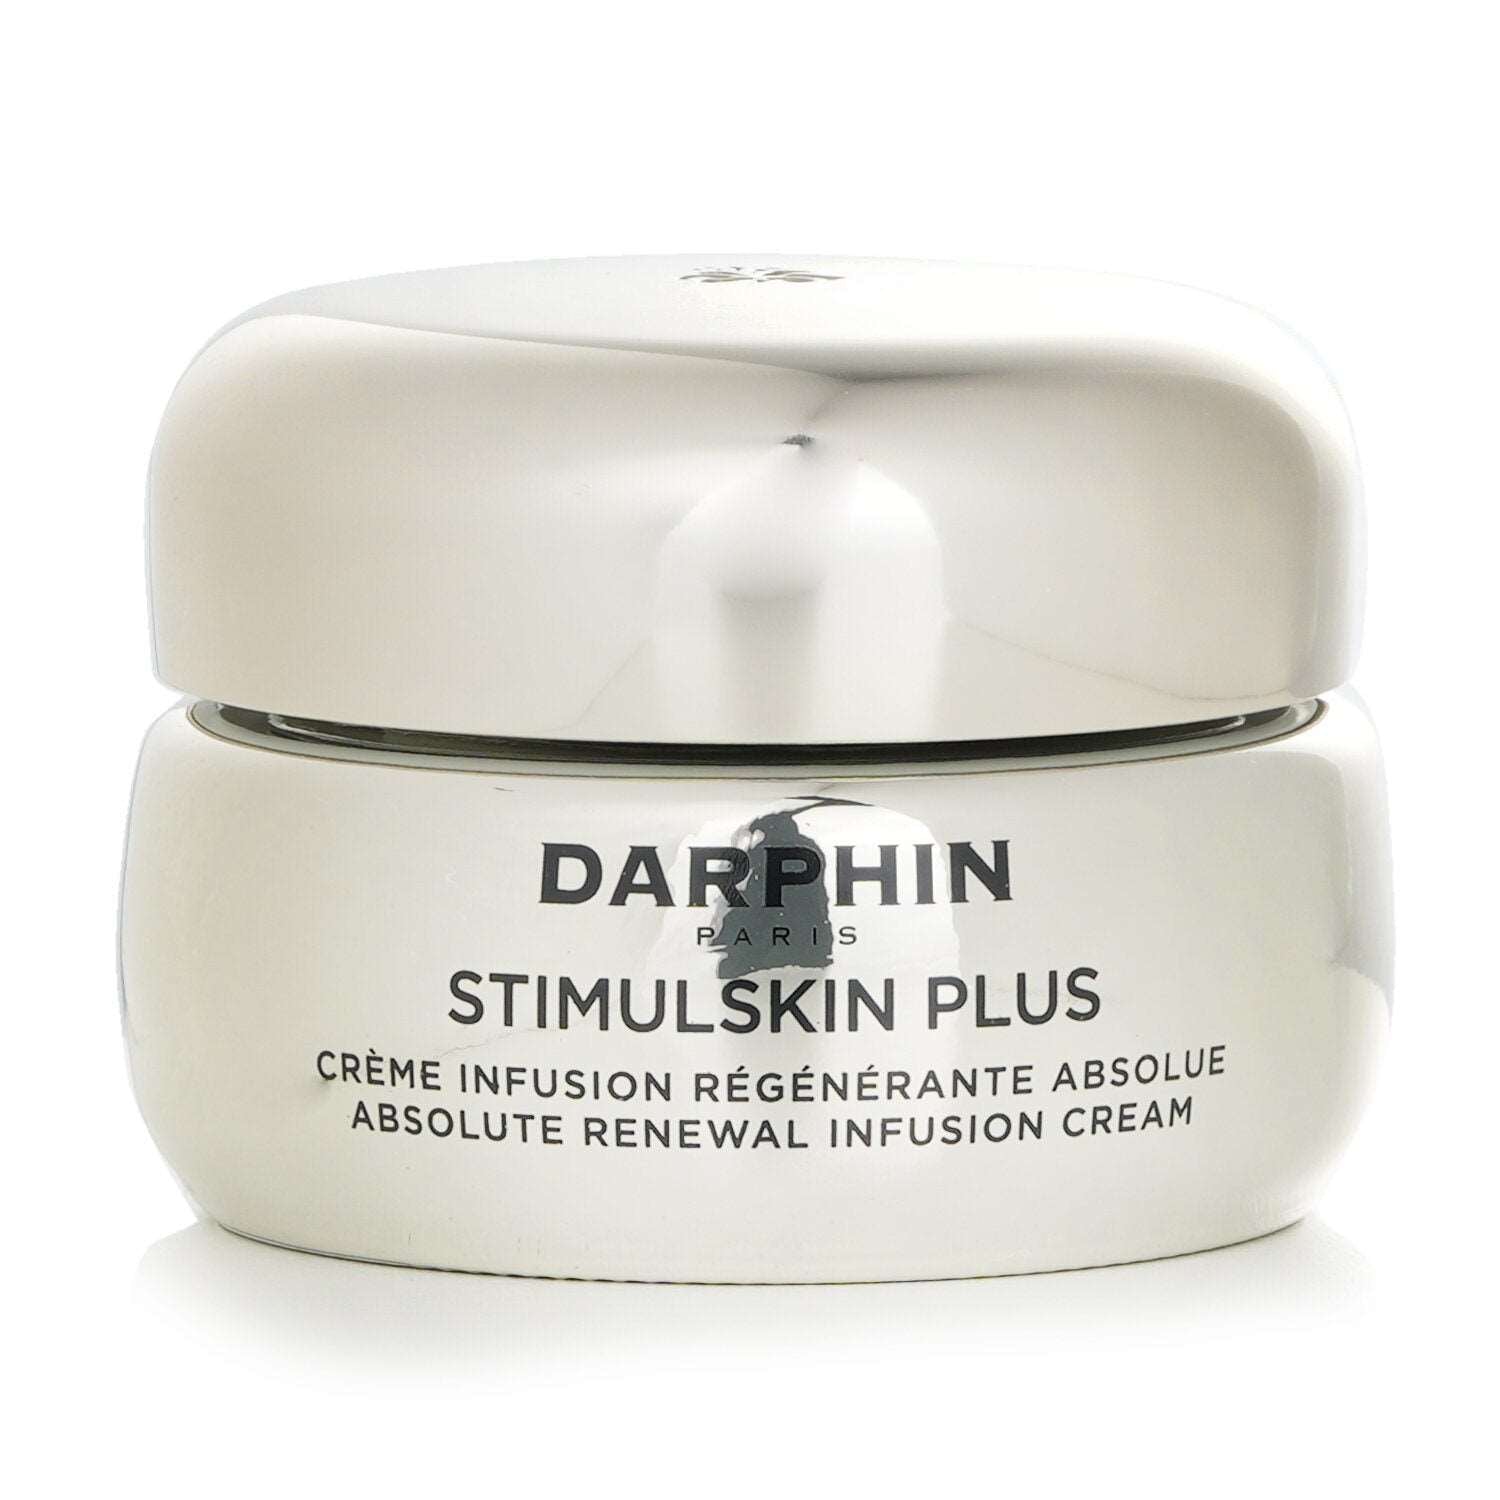 DARPHIN - Stimulskin Plus Absolute Renewal Infusion Cream - Normal to Combination Skin - 50ml/1.7oz 3P's Inclusive Beauty